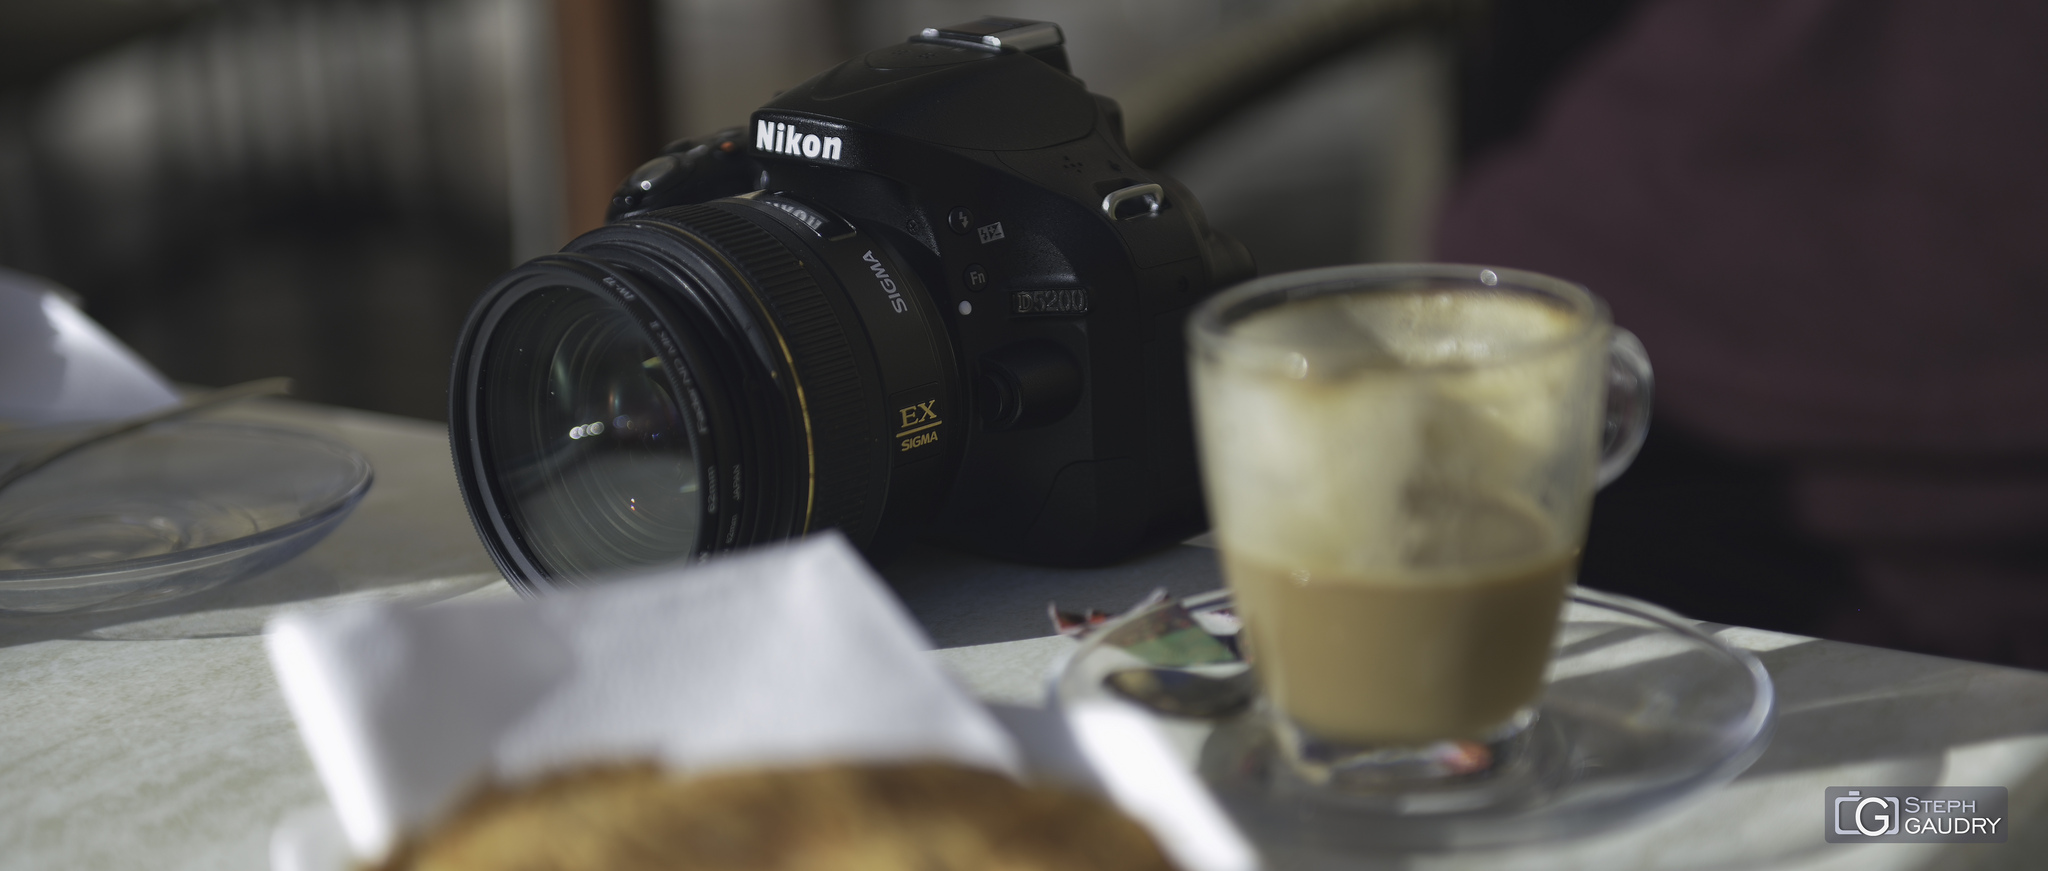 Nikon D5200 - Sigma 30mm f1,4 EX DC HSM [Klik om de diavoorstelling te starten]